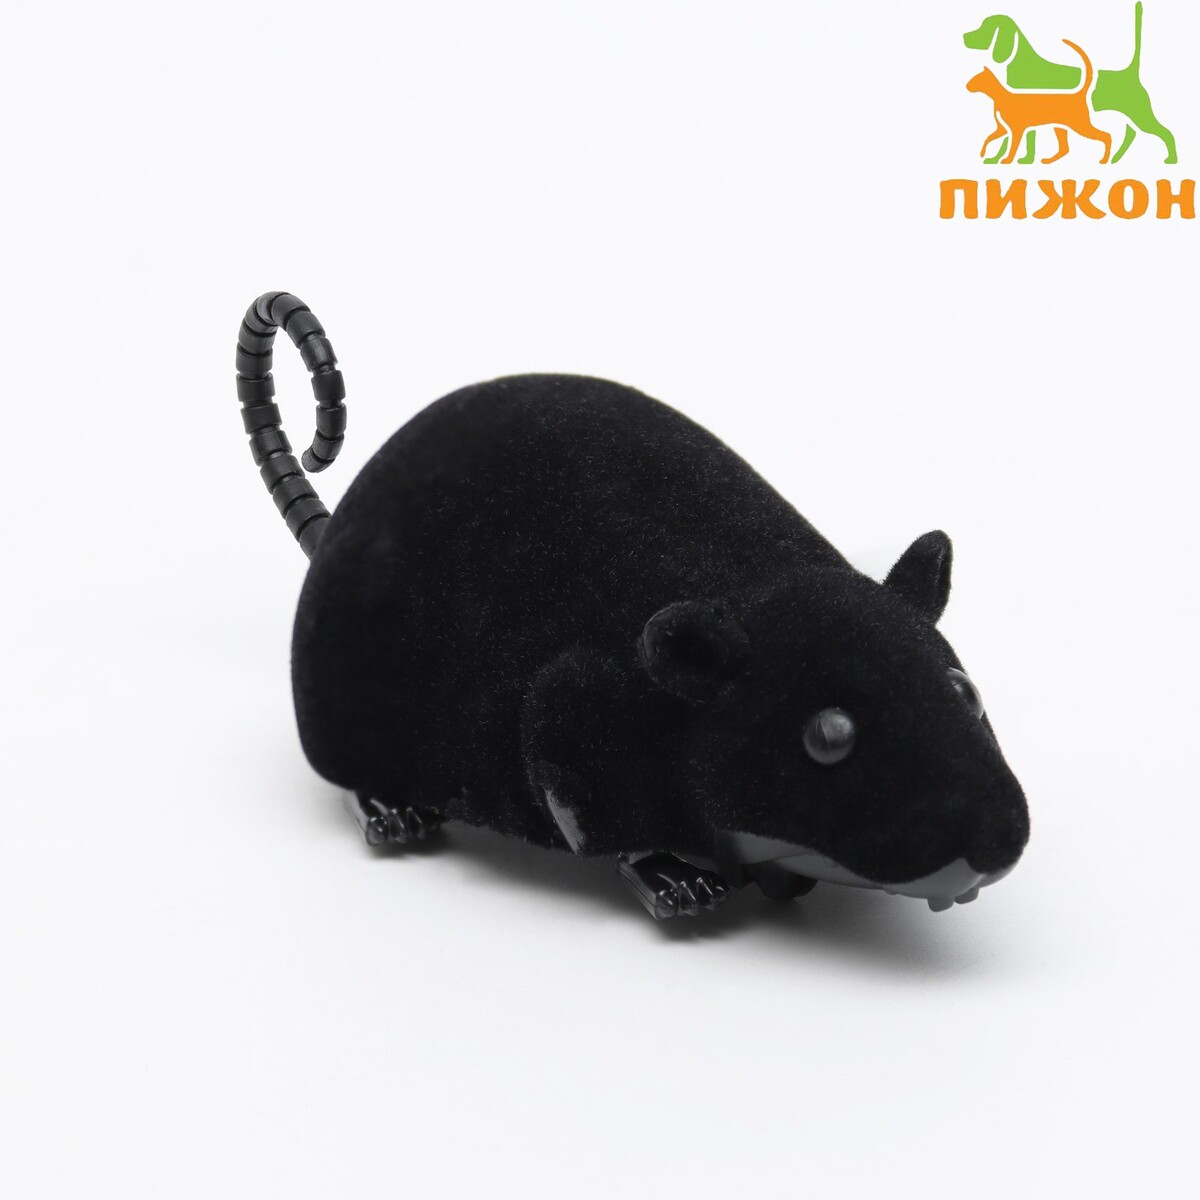 Мышь заводная бархатная, 12 см, черная мышь заводная 7 см серая